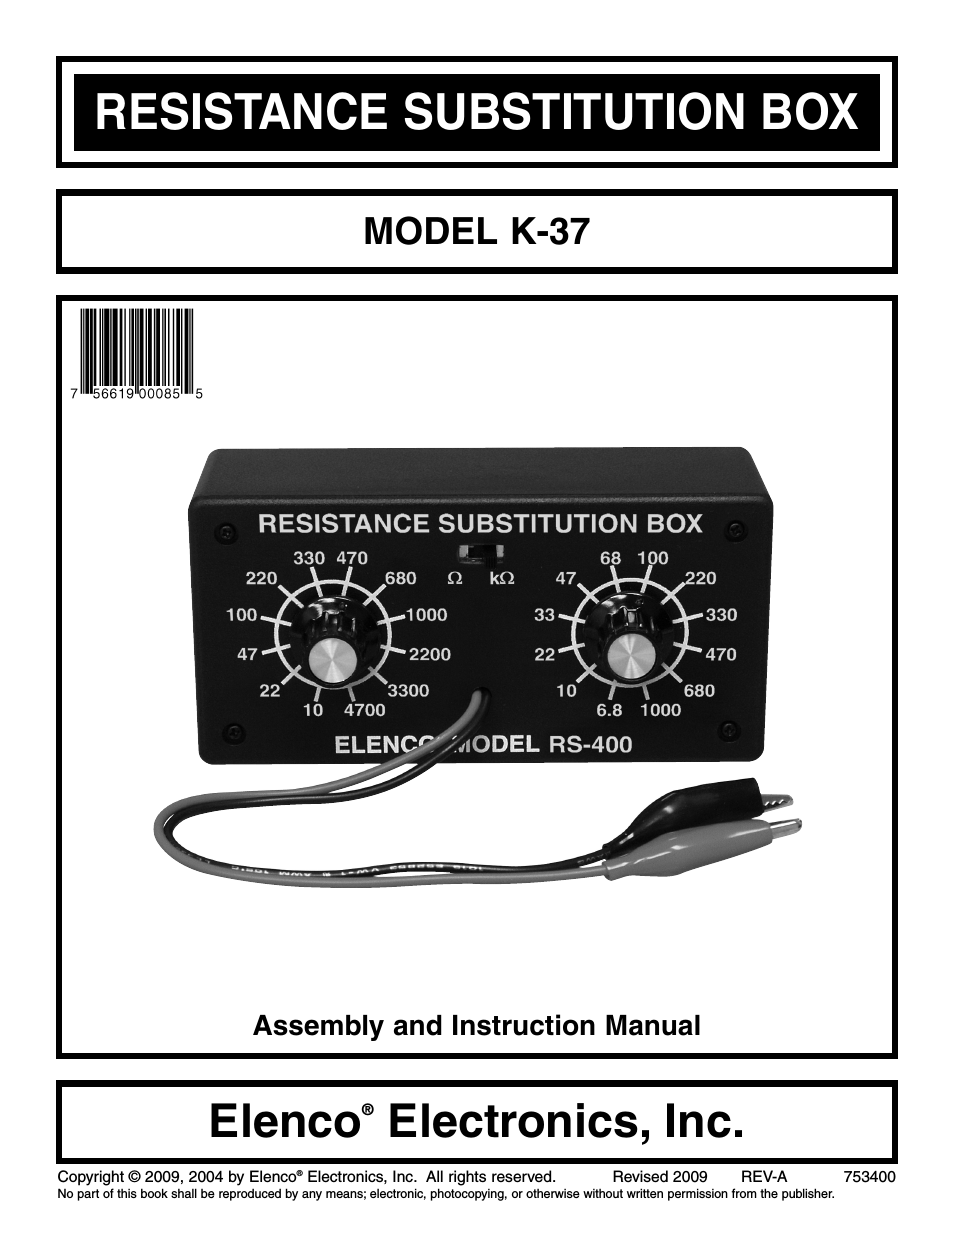 Resistor Substitution Box